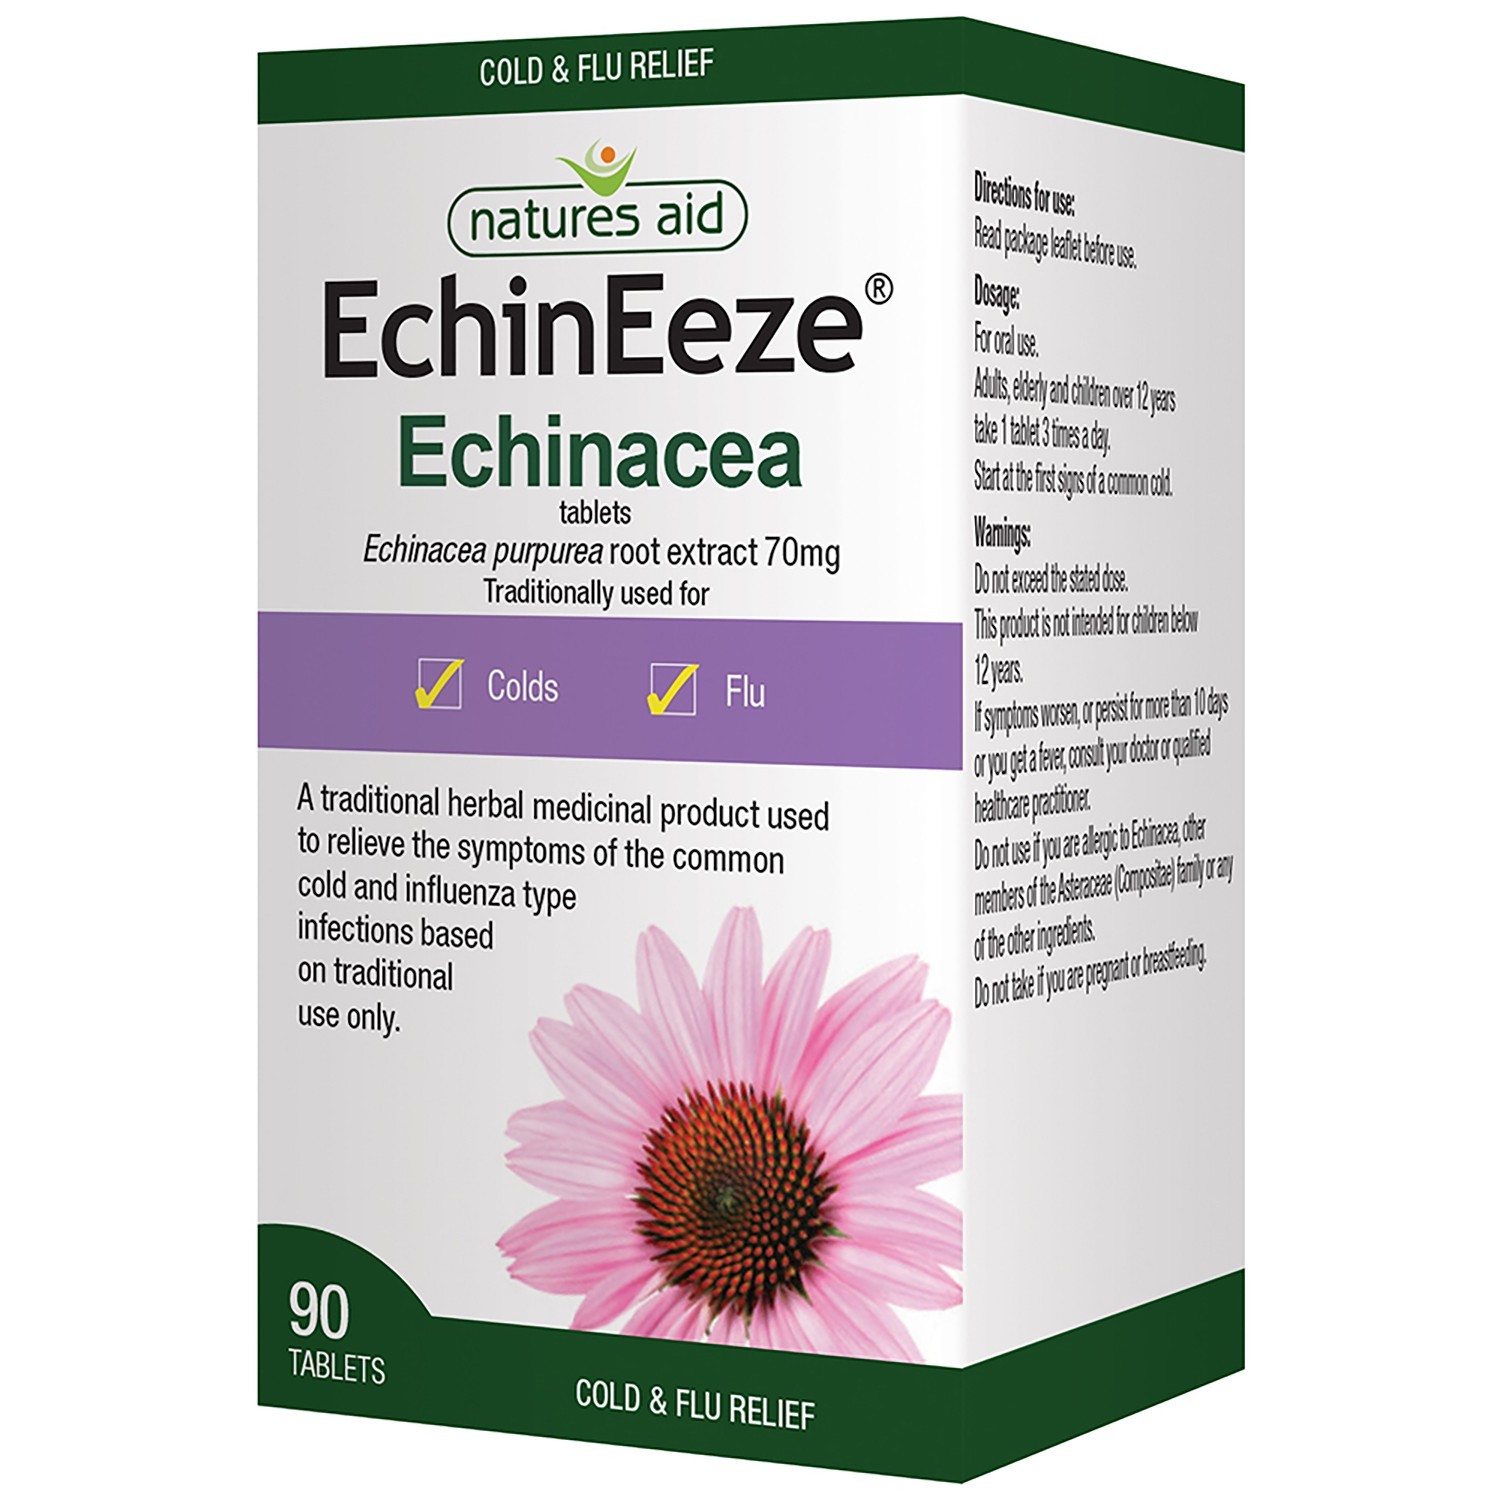 Natures Aid Echineeze 70mg (Equivalent 460mg -530mg OF Echinacea)